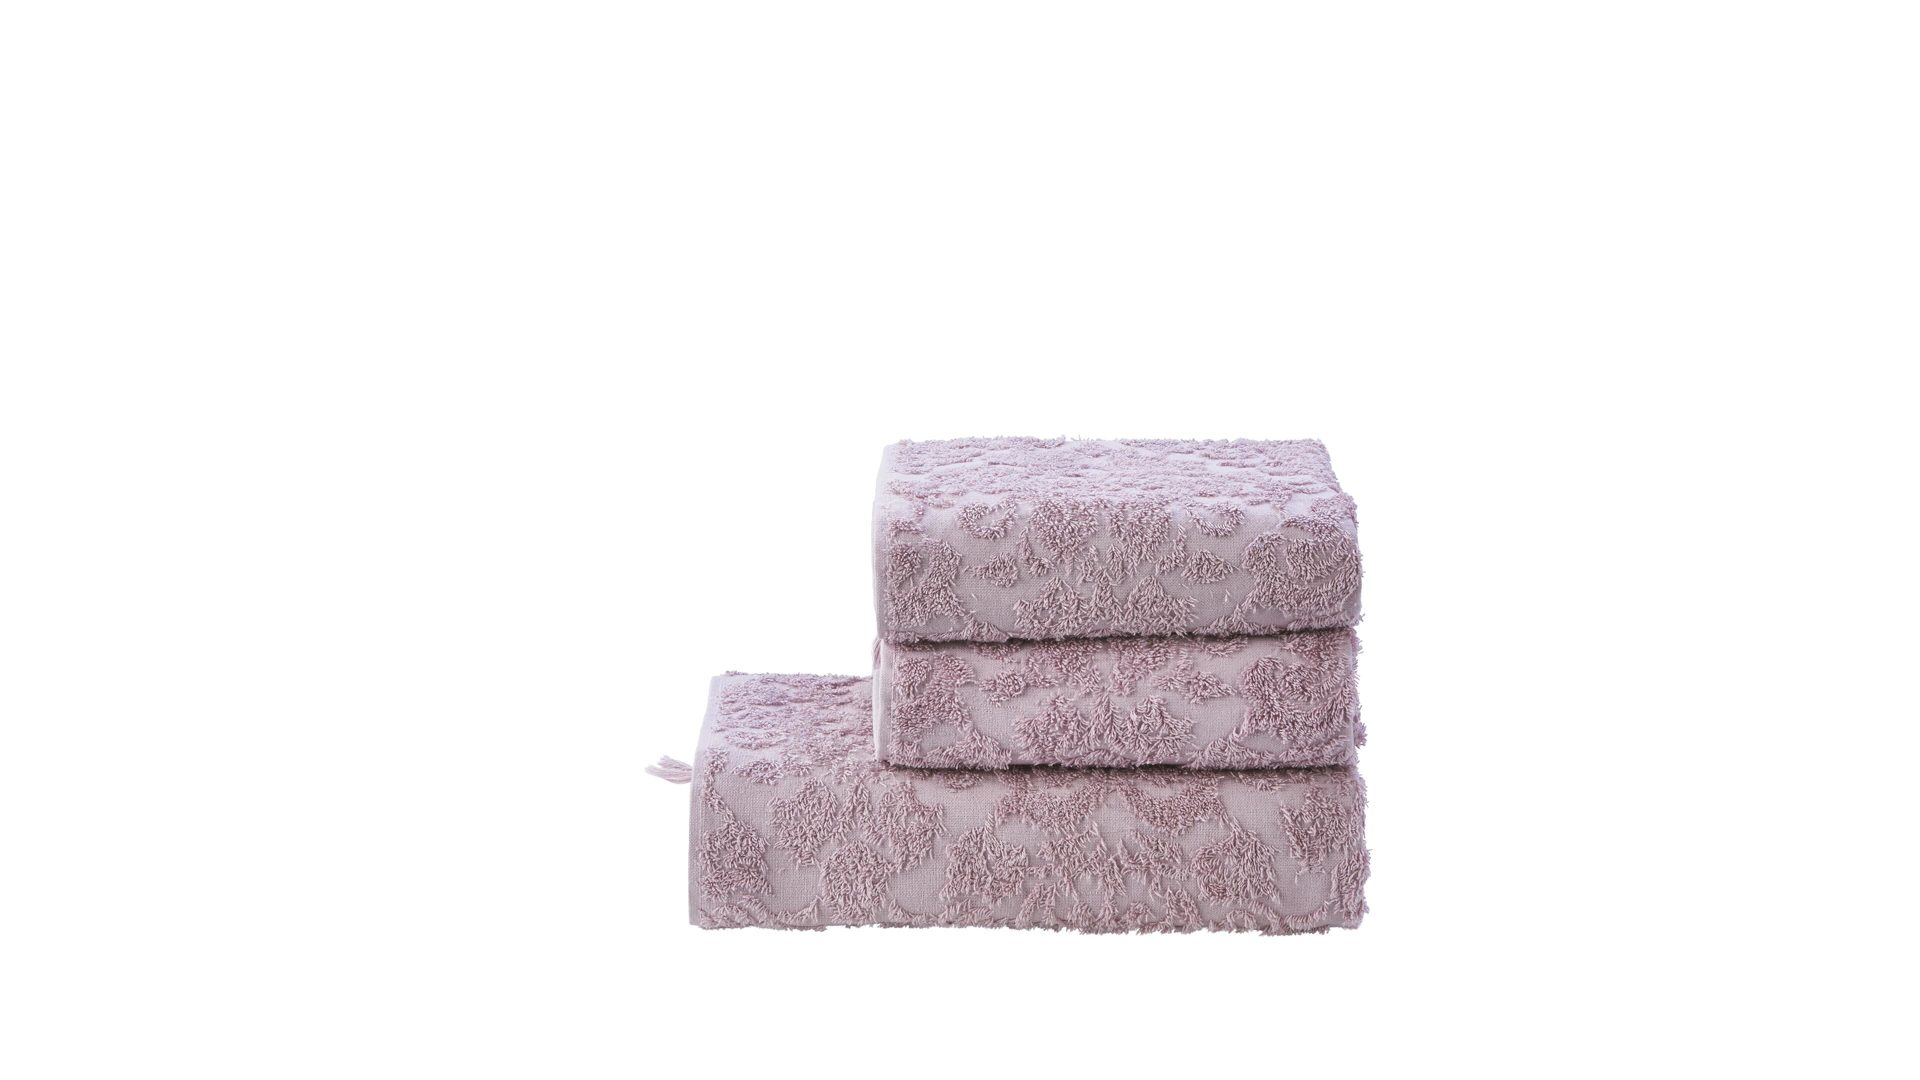 Handtuch-Set Done by karabel home company aus Stoff in Pastellfarben done Handtuch-Set Provence Ornaments altrosafarbene Baumwolle  – dreiteilig